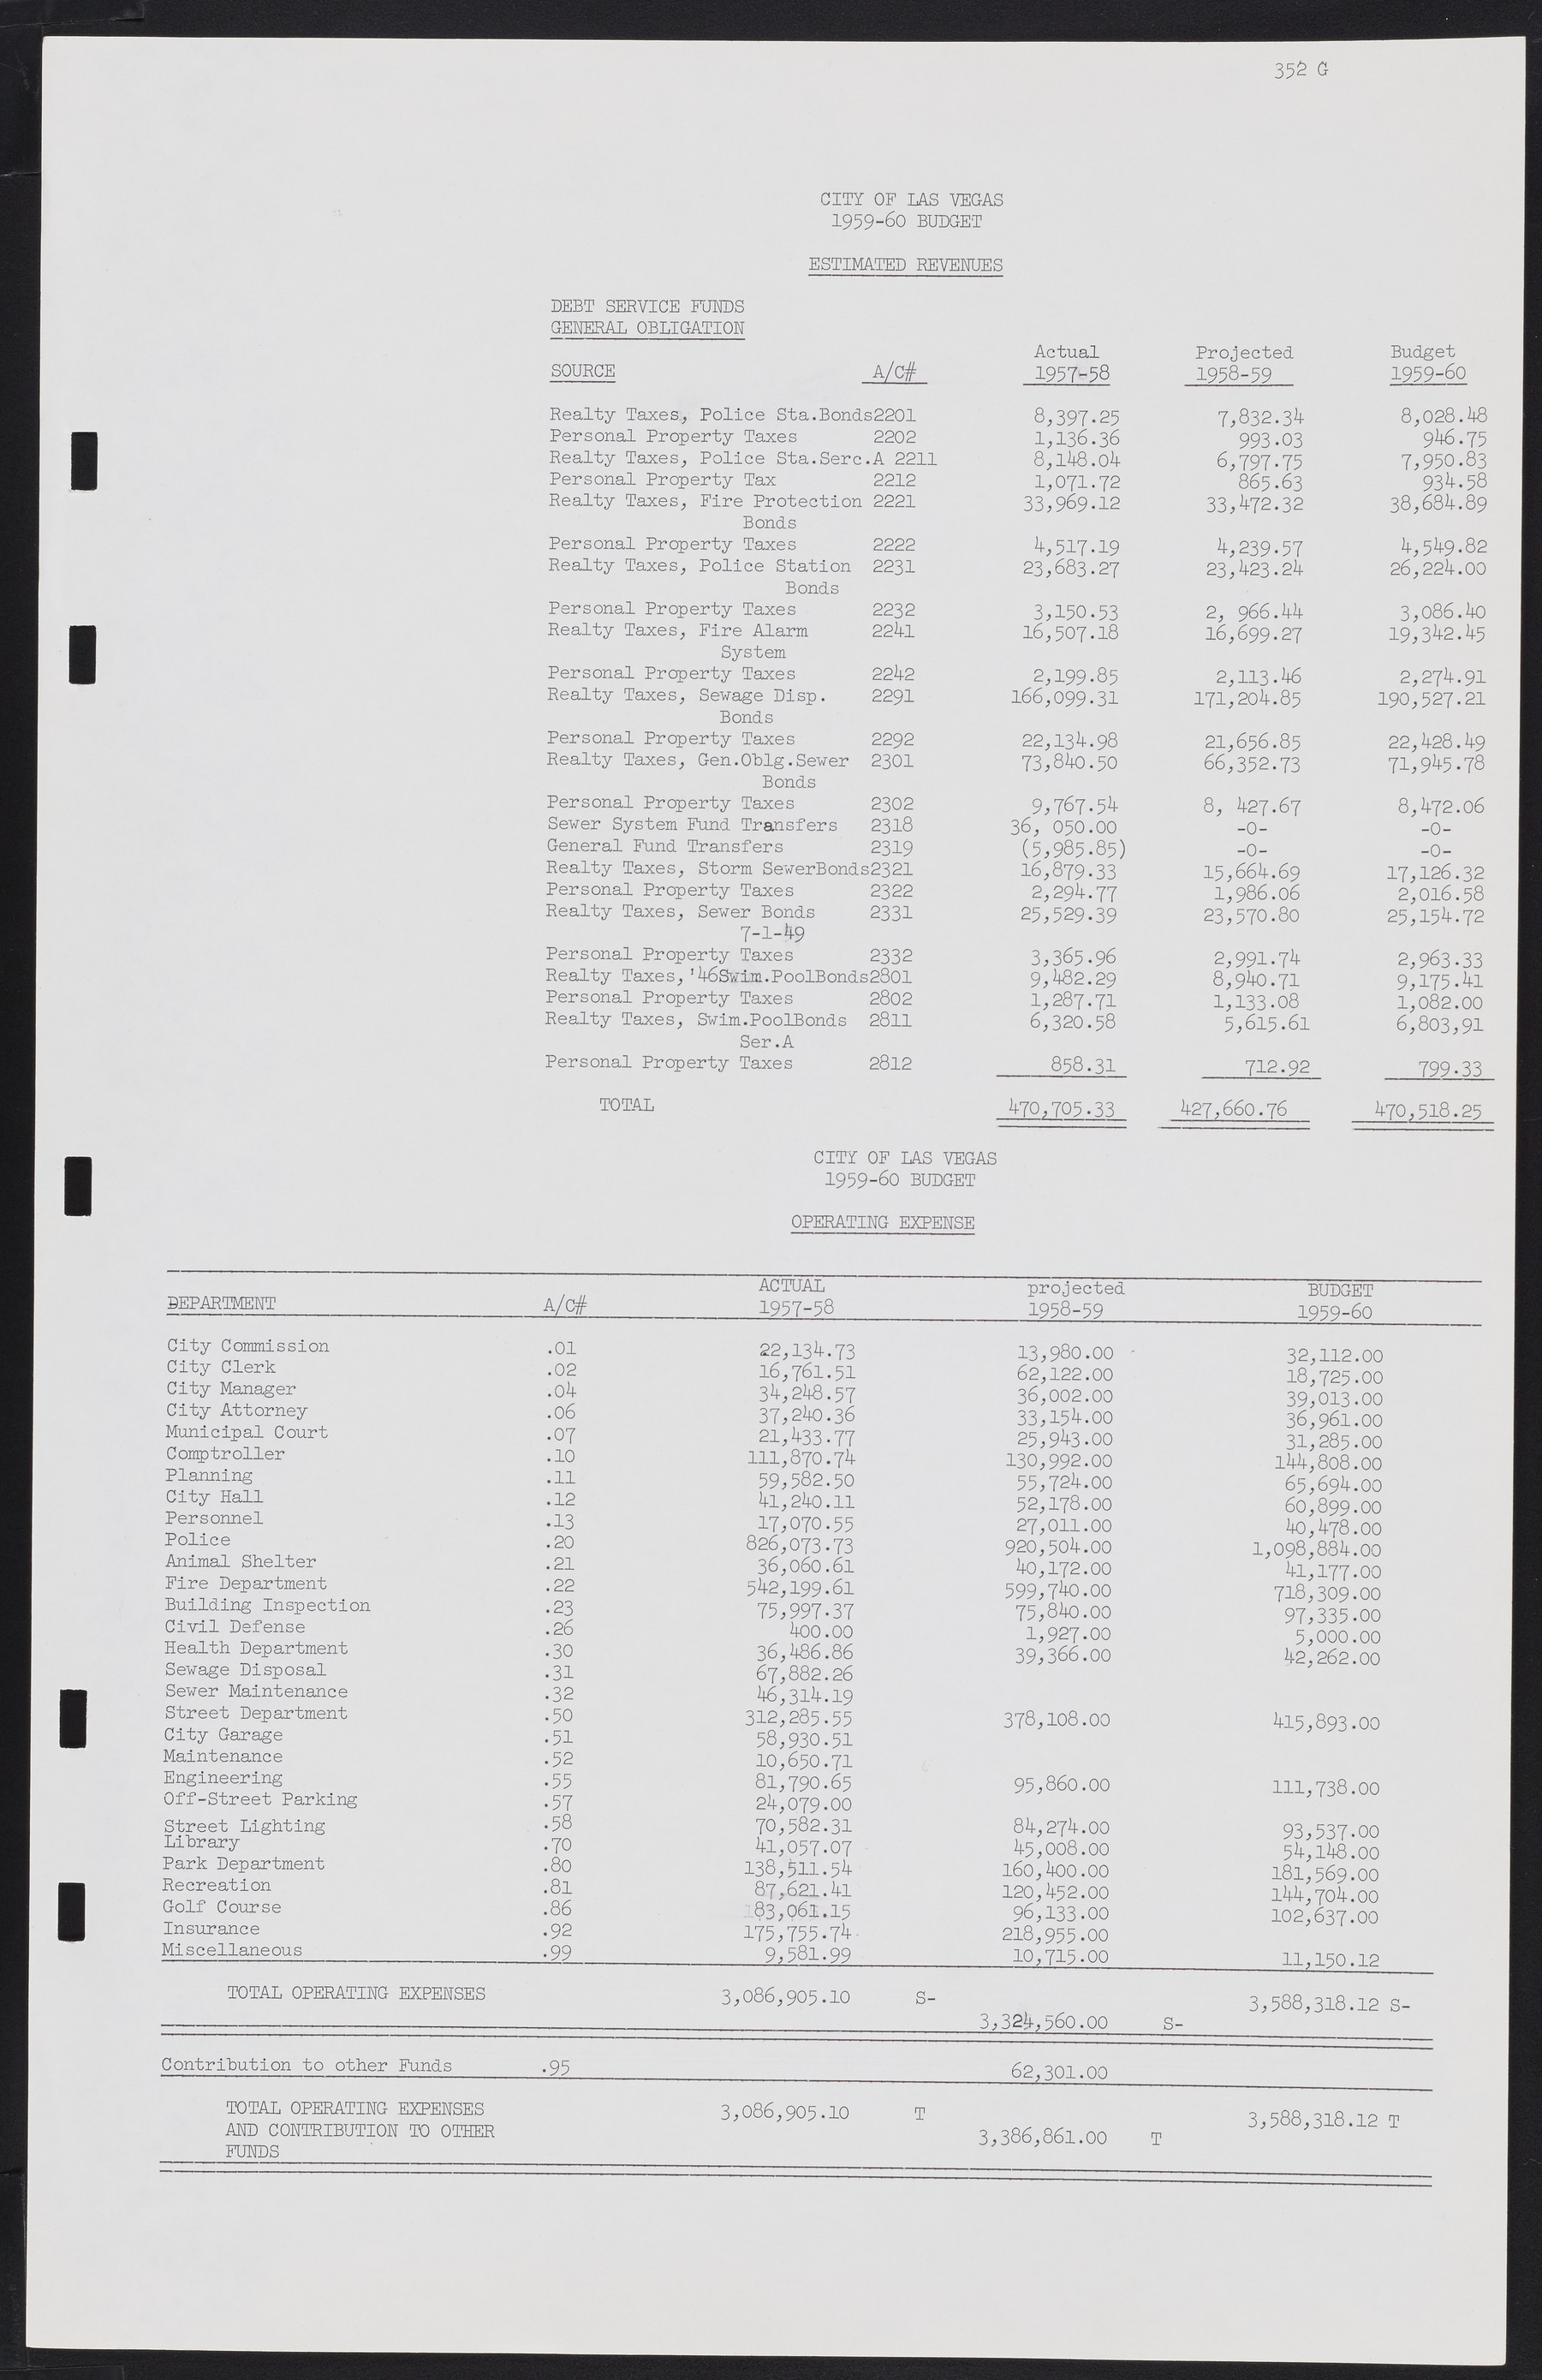 Las Vegas City Commission Minutes, November 20, 1957 to December 2, 1959, lvc000011-367